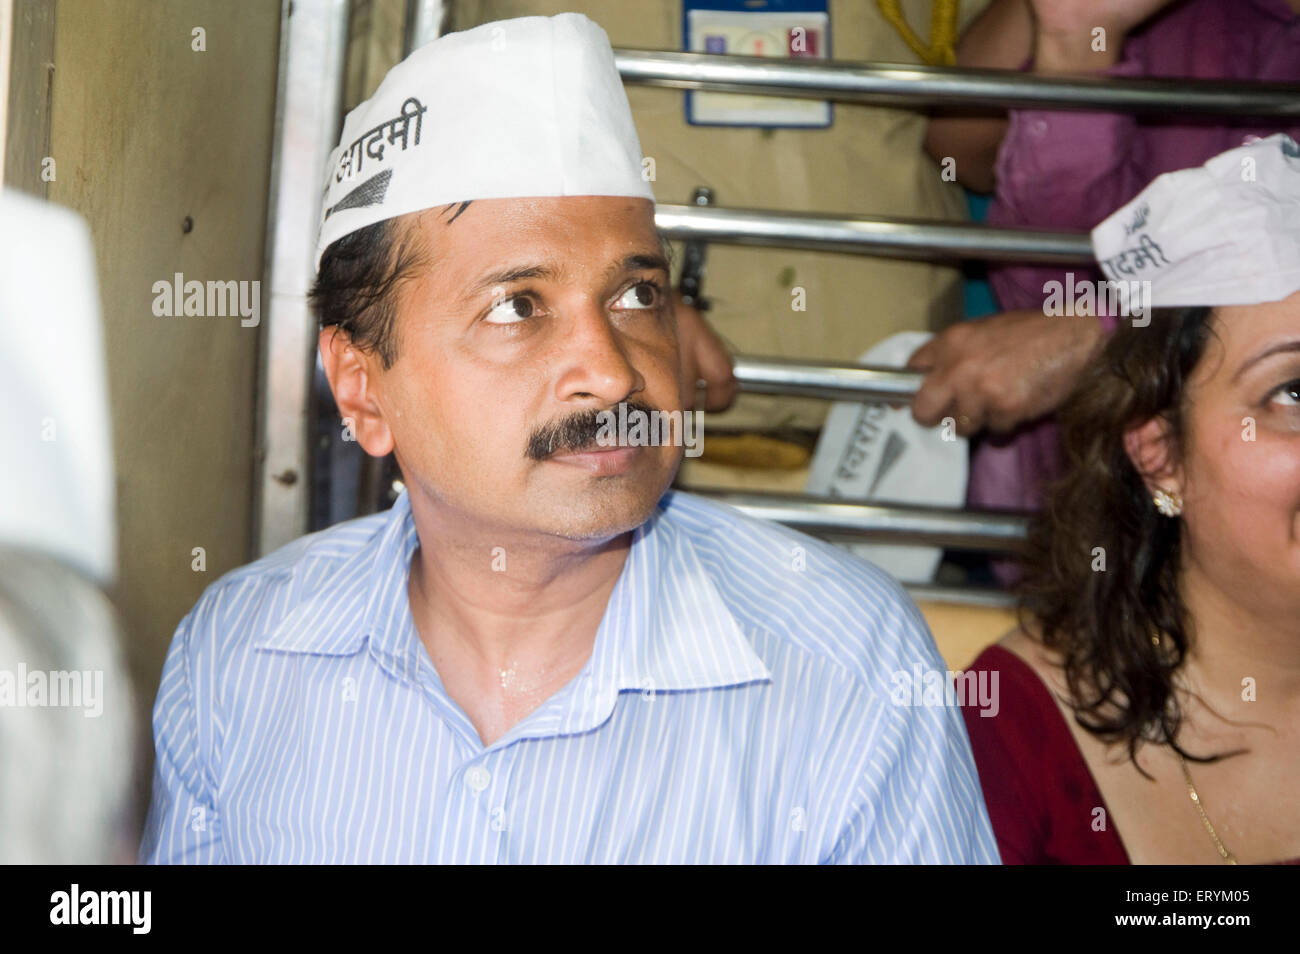 Aam Aadmi Arvind Kejriwal chef parti en train local à Mumbai Maharashtra Inde Asie Banque D'Images